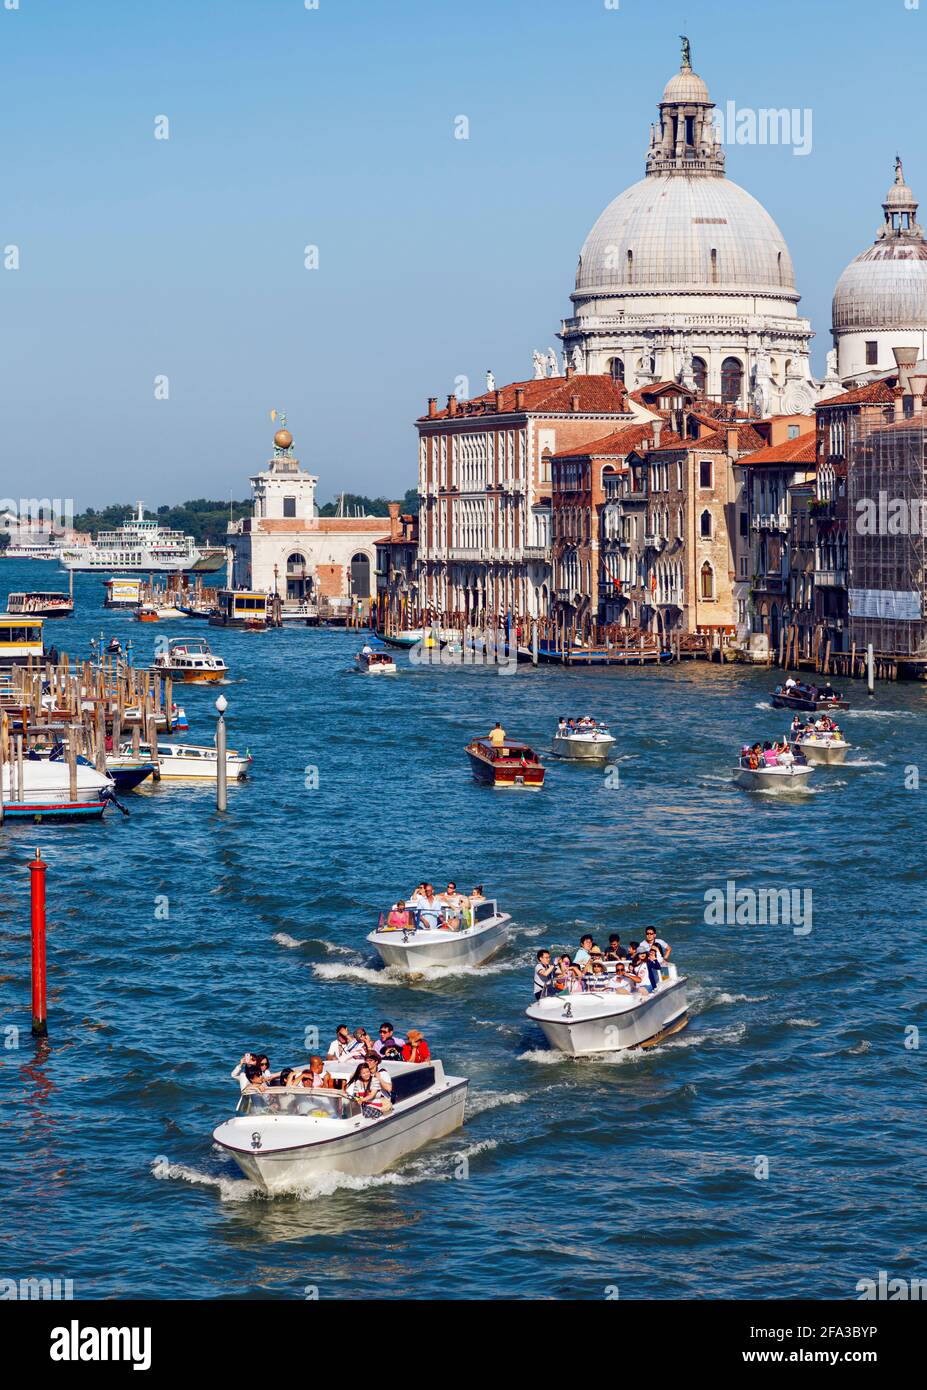 Venedig, Provinz Venedig, Region Venetien, Italien. Blick auf den Canale Grande zur Santa Maria della Salute. Venedig und seine Lagune gehören zum UNESCO-Weltkulturerbe S Stockfoto